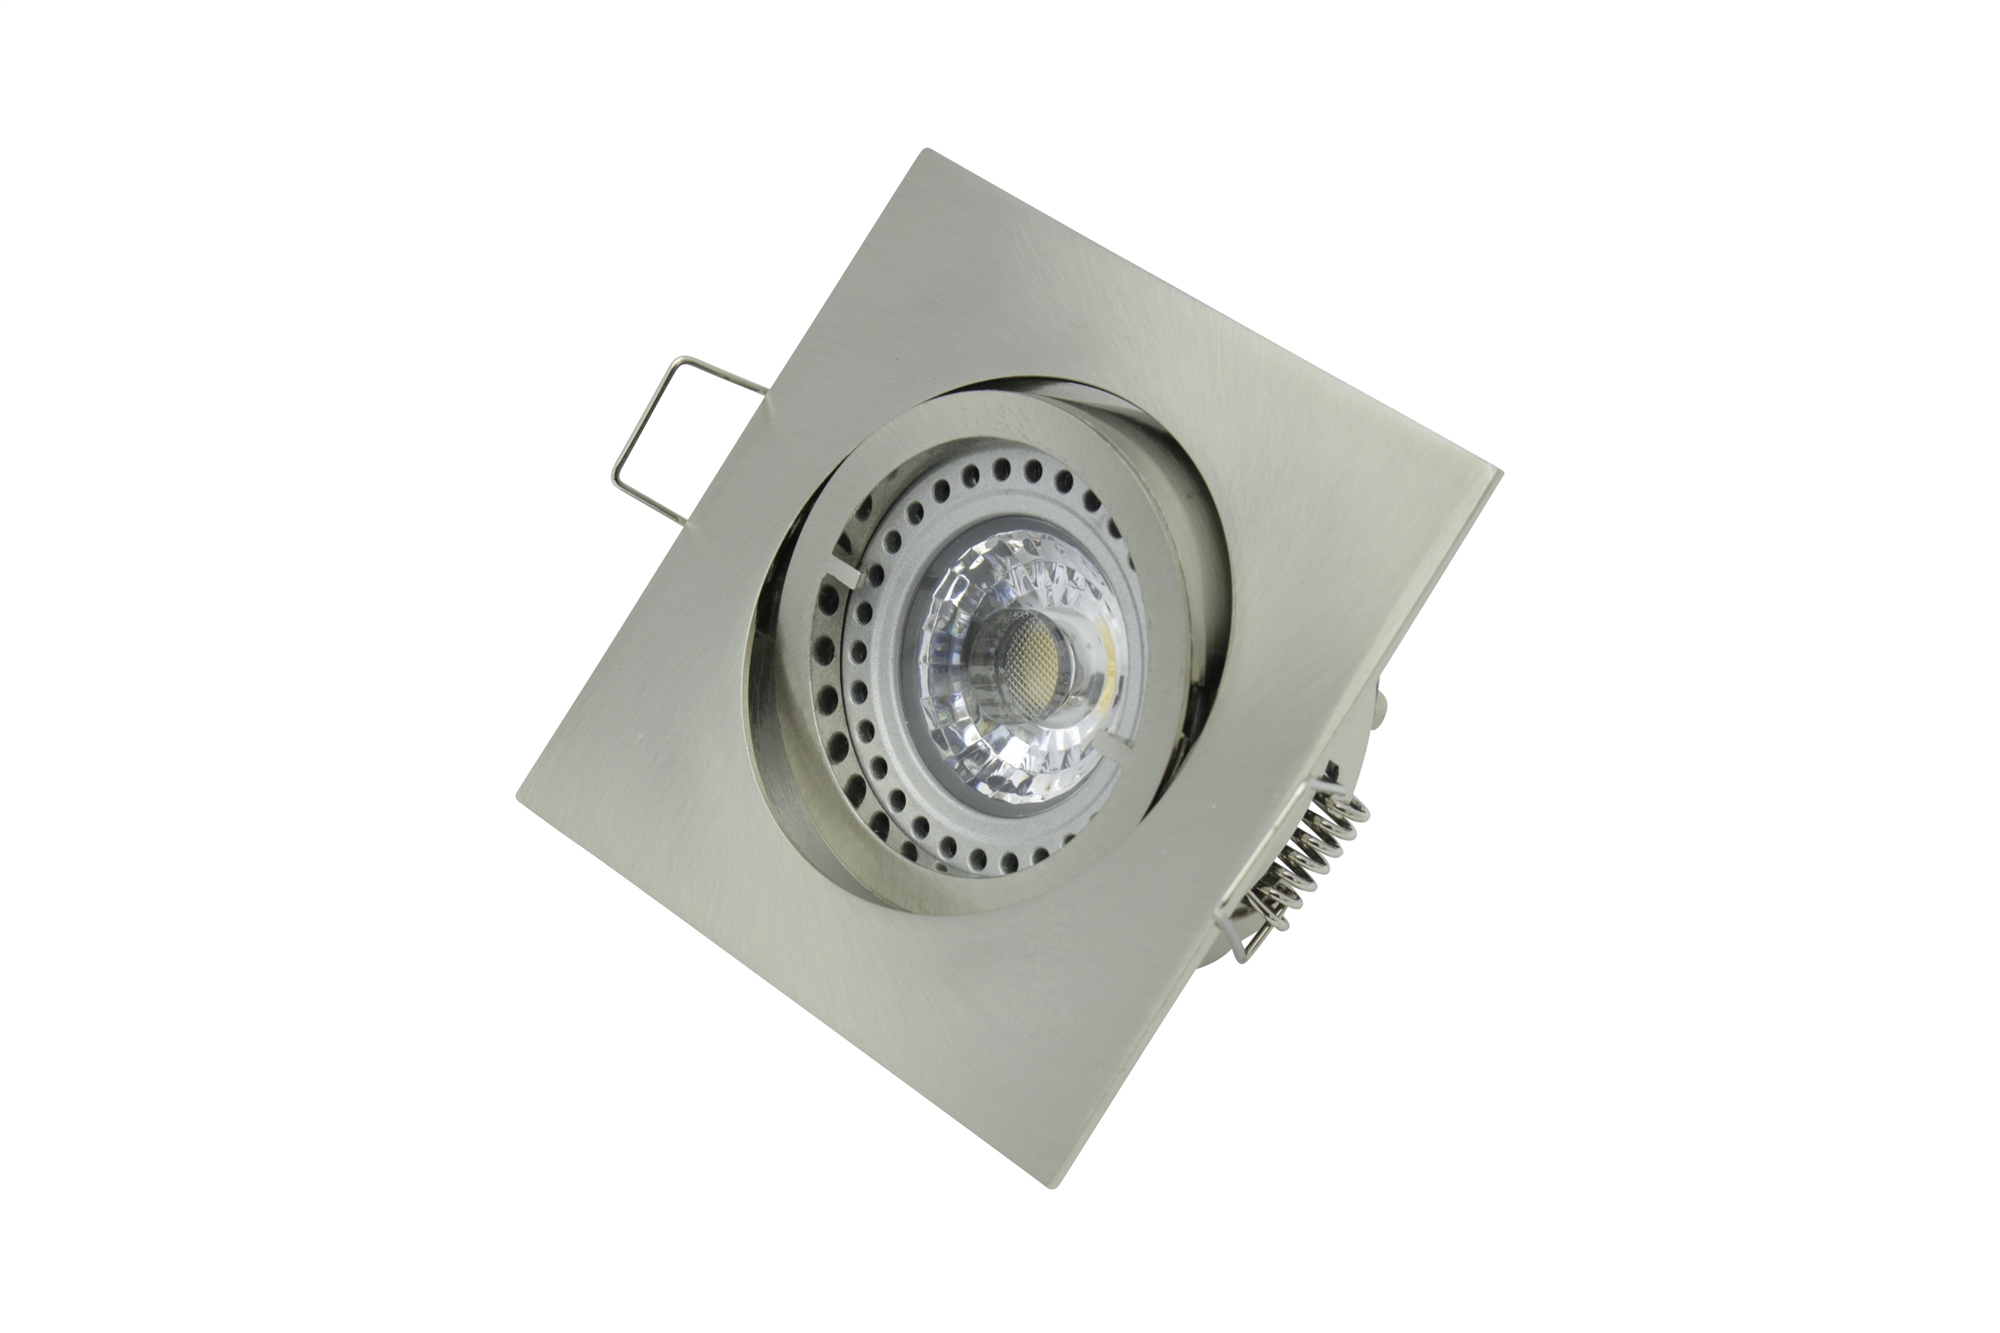 Lampenlux LED-Einbaustrahler Spot Snap eckig nickel gebürstet schwenkbar 8.2x8.2cm 12V MR16 rostfrei Aluminium